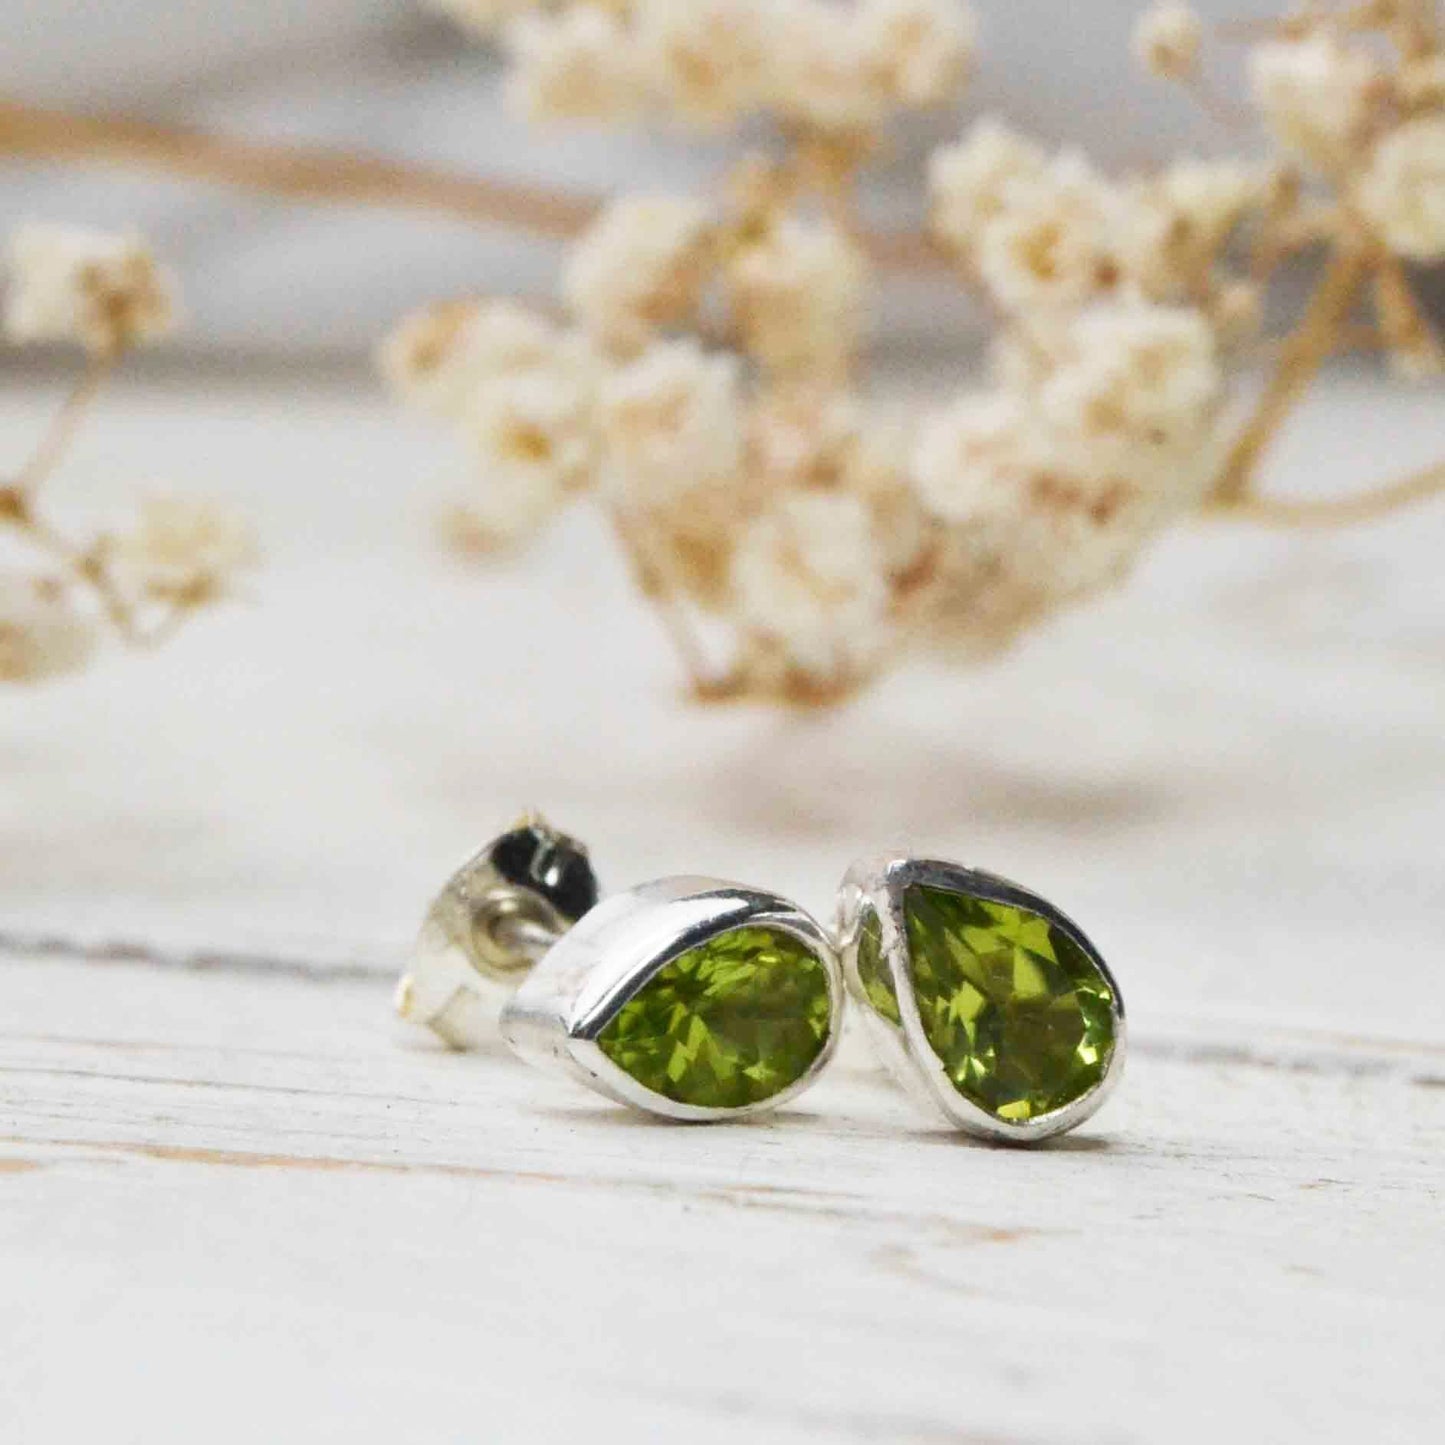 Becky Pearce Designs Earrings 6x4mm / August - Peridot Pear, or drop shaped gemstone stud earrings